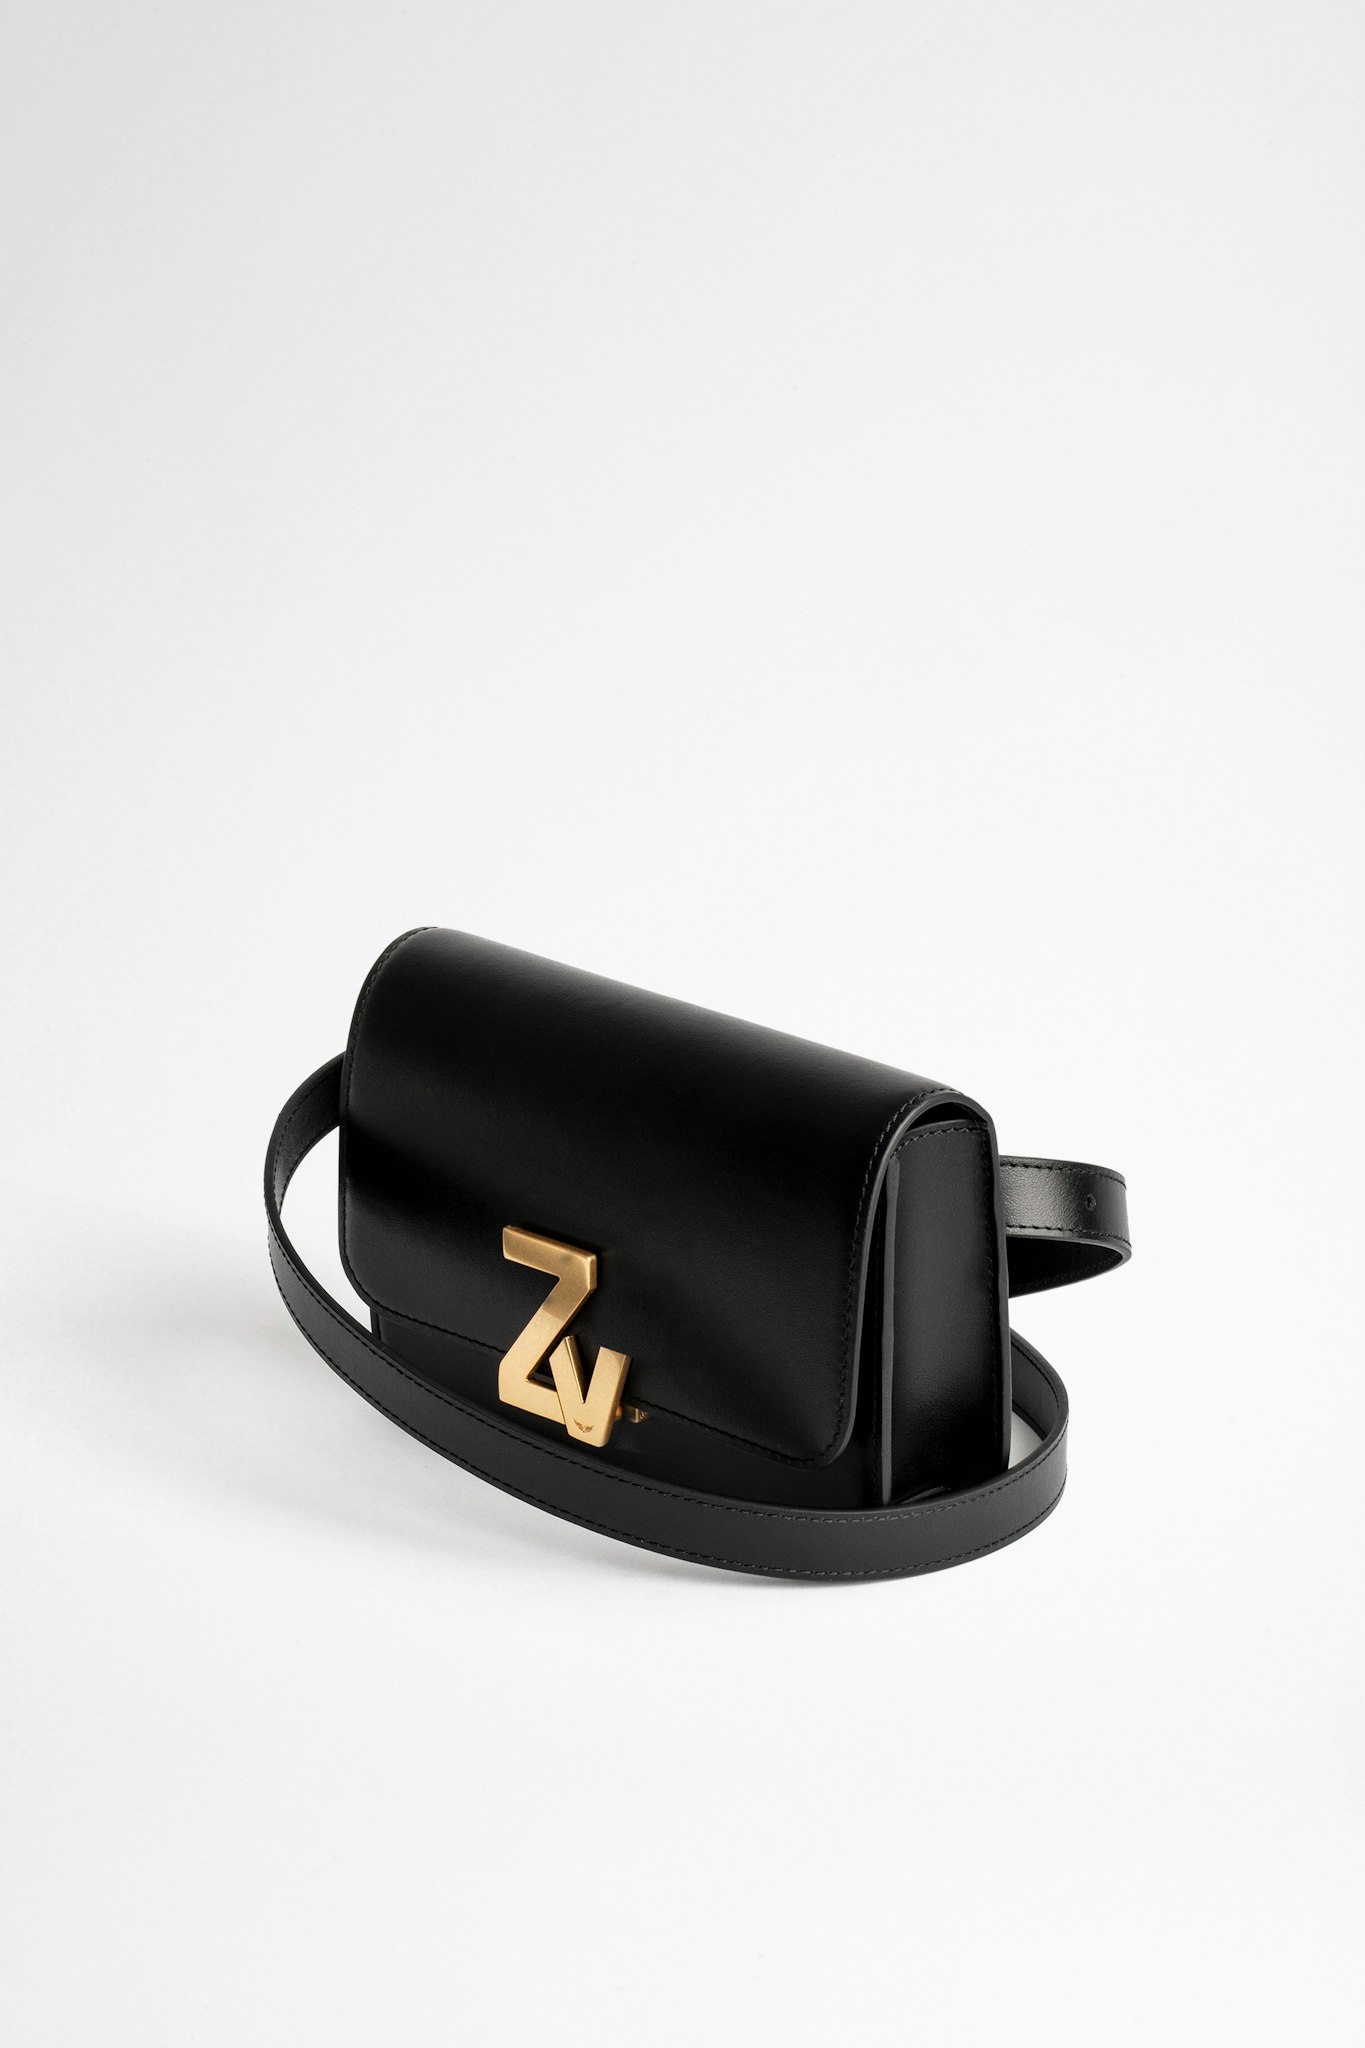 ZV Initiale Le Belt Bag